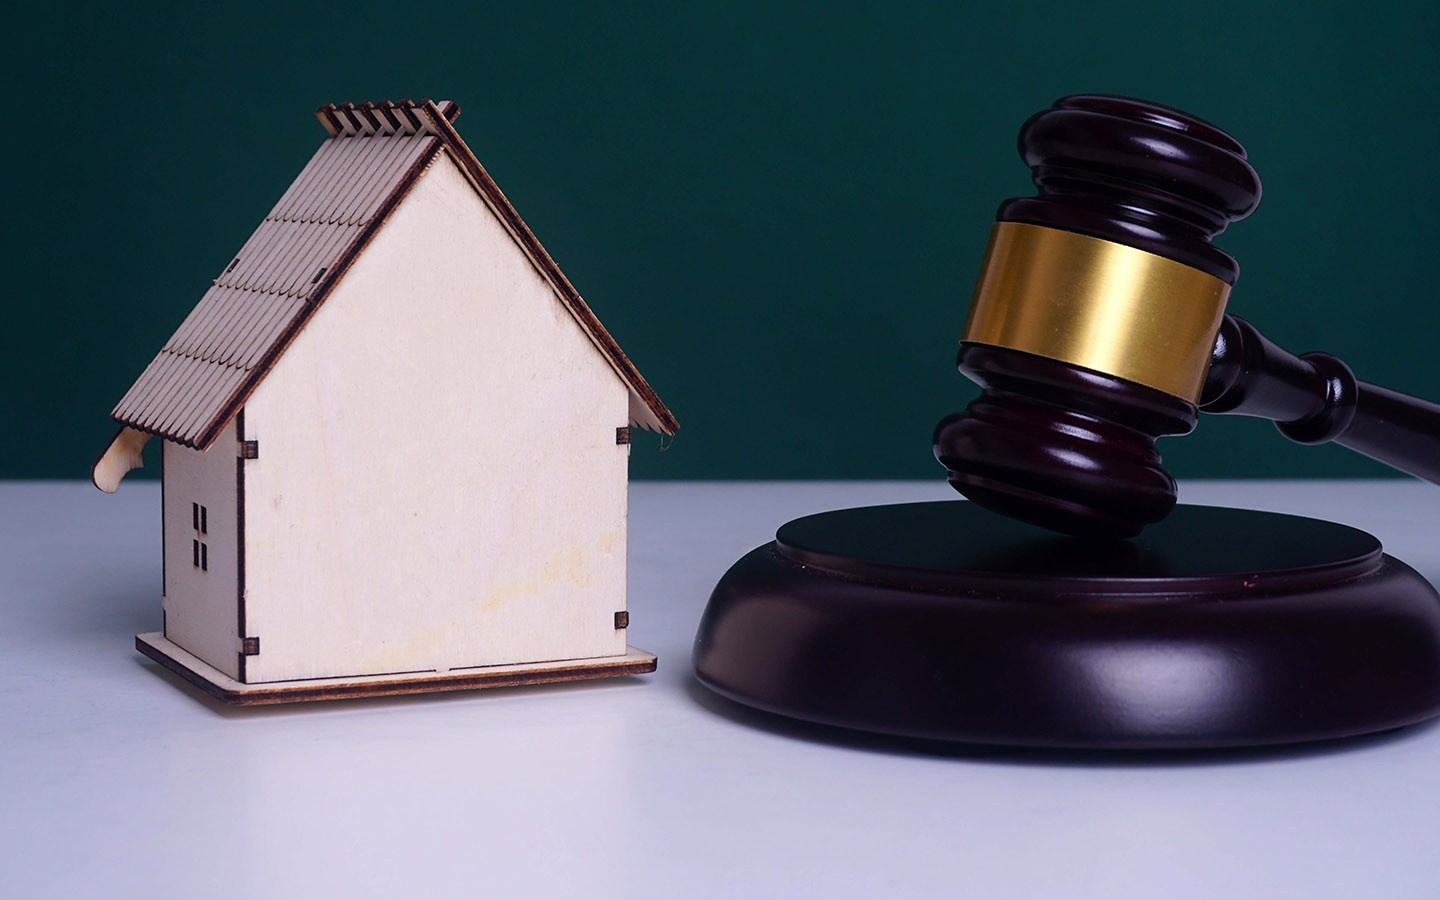 Short-term rental laws in Abu Dhabi help strengthen the landlord-tenant relationship